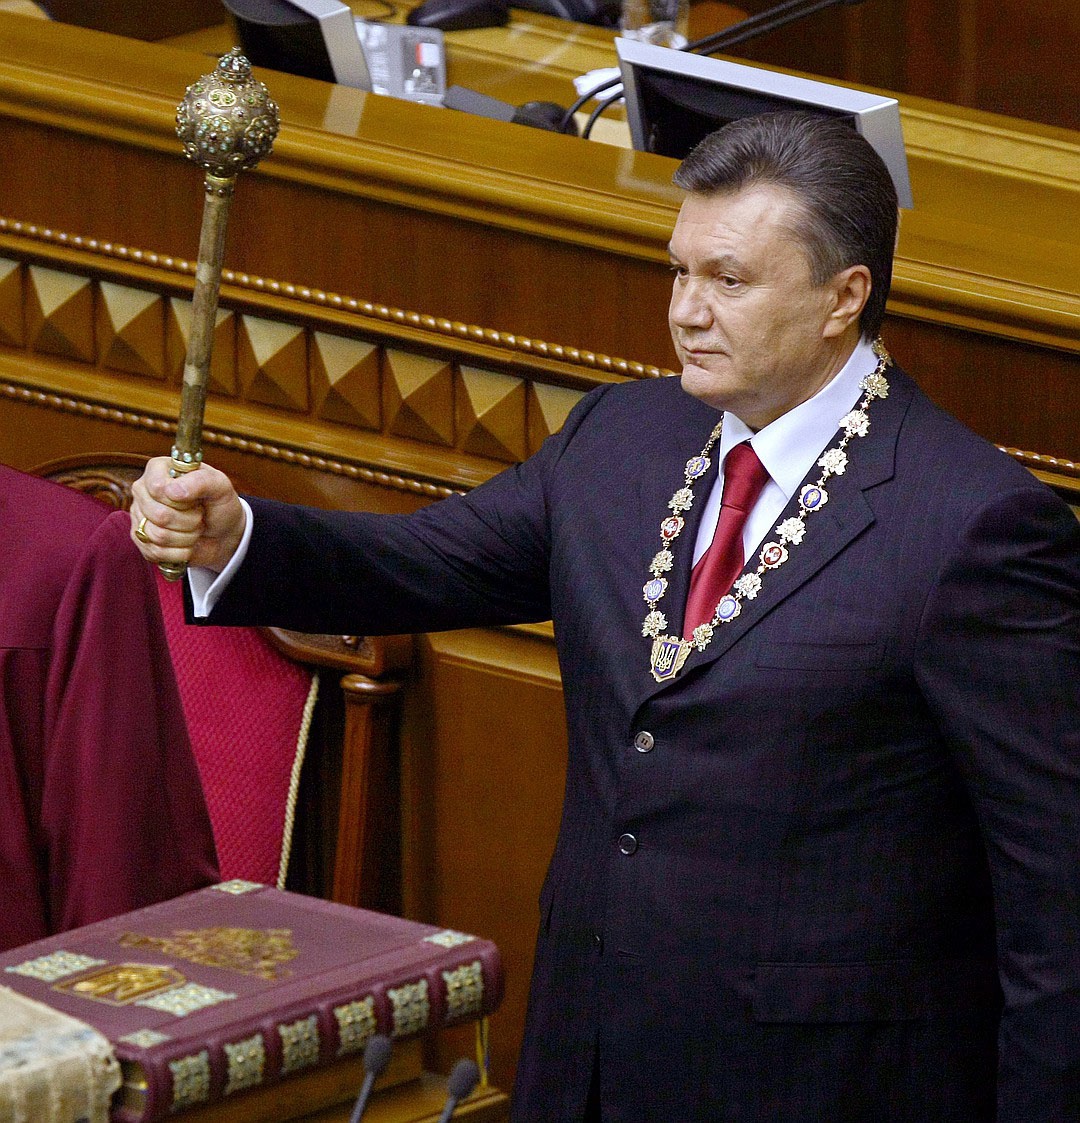 Став президентом, Янукович оказался не на своём месте.